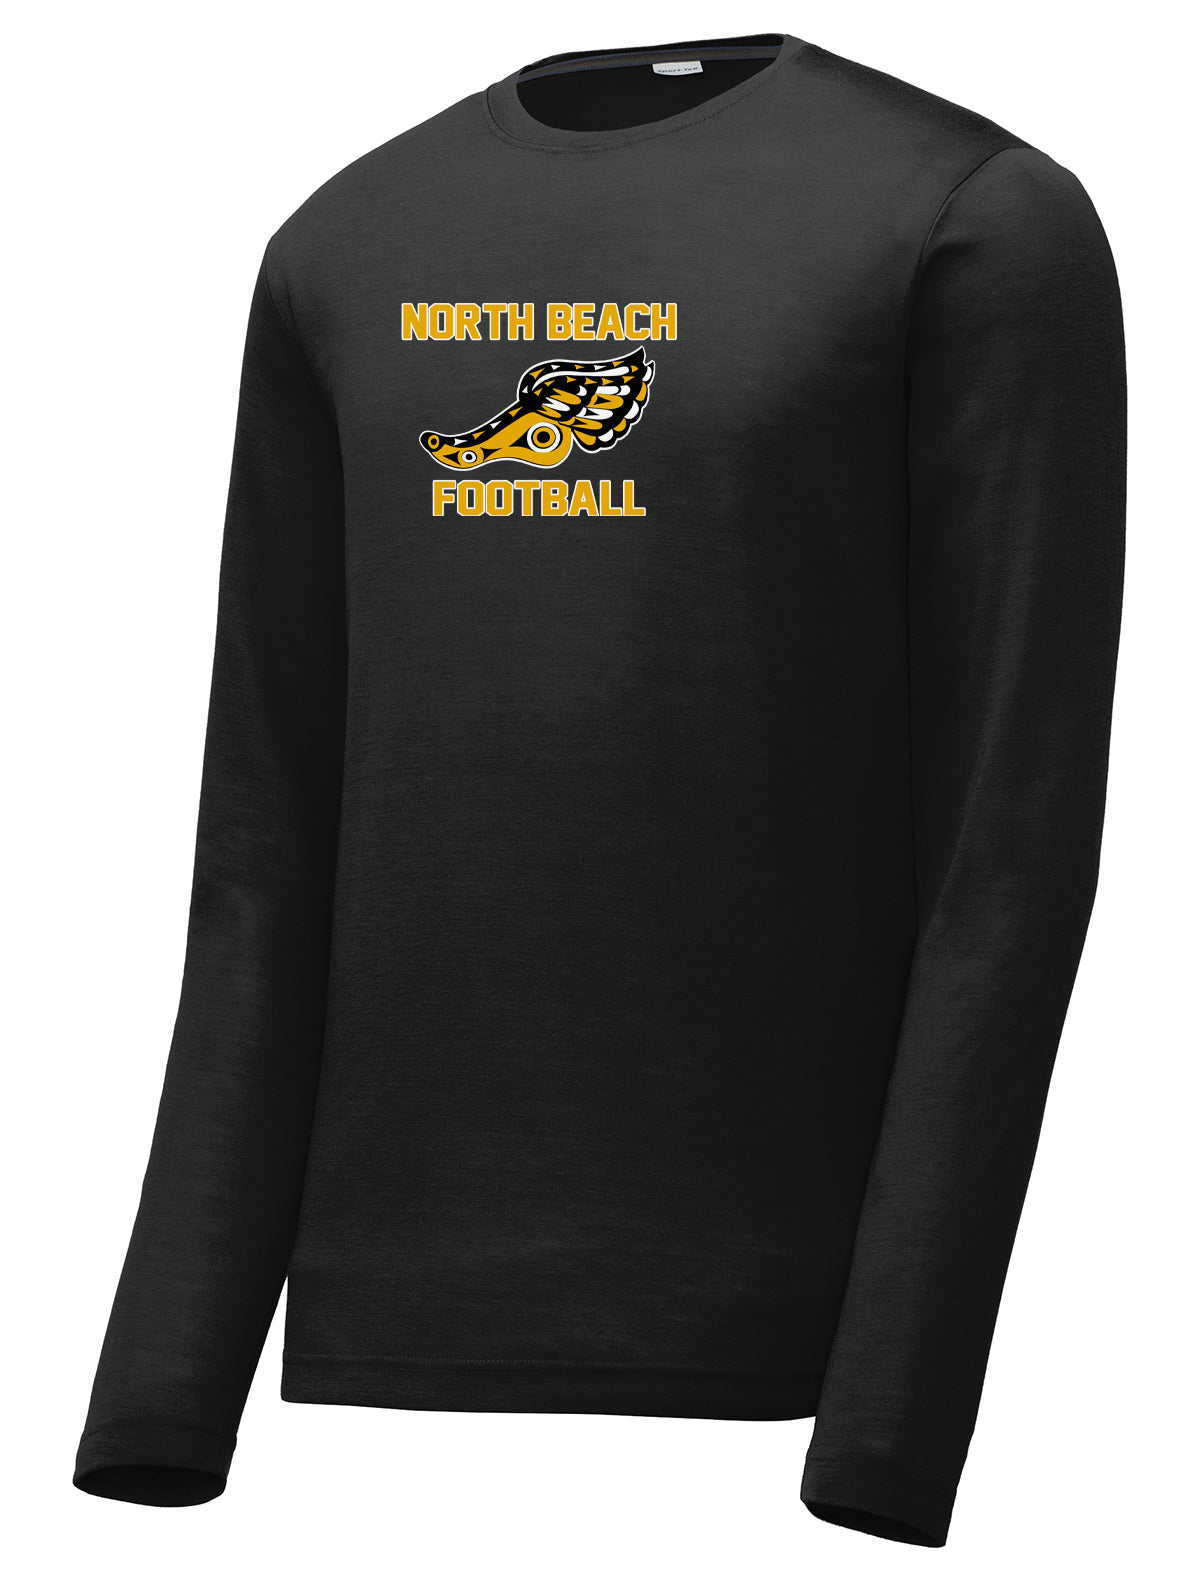 North Beach Football  Long Sleeve CottonTouch Performance Shirt